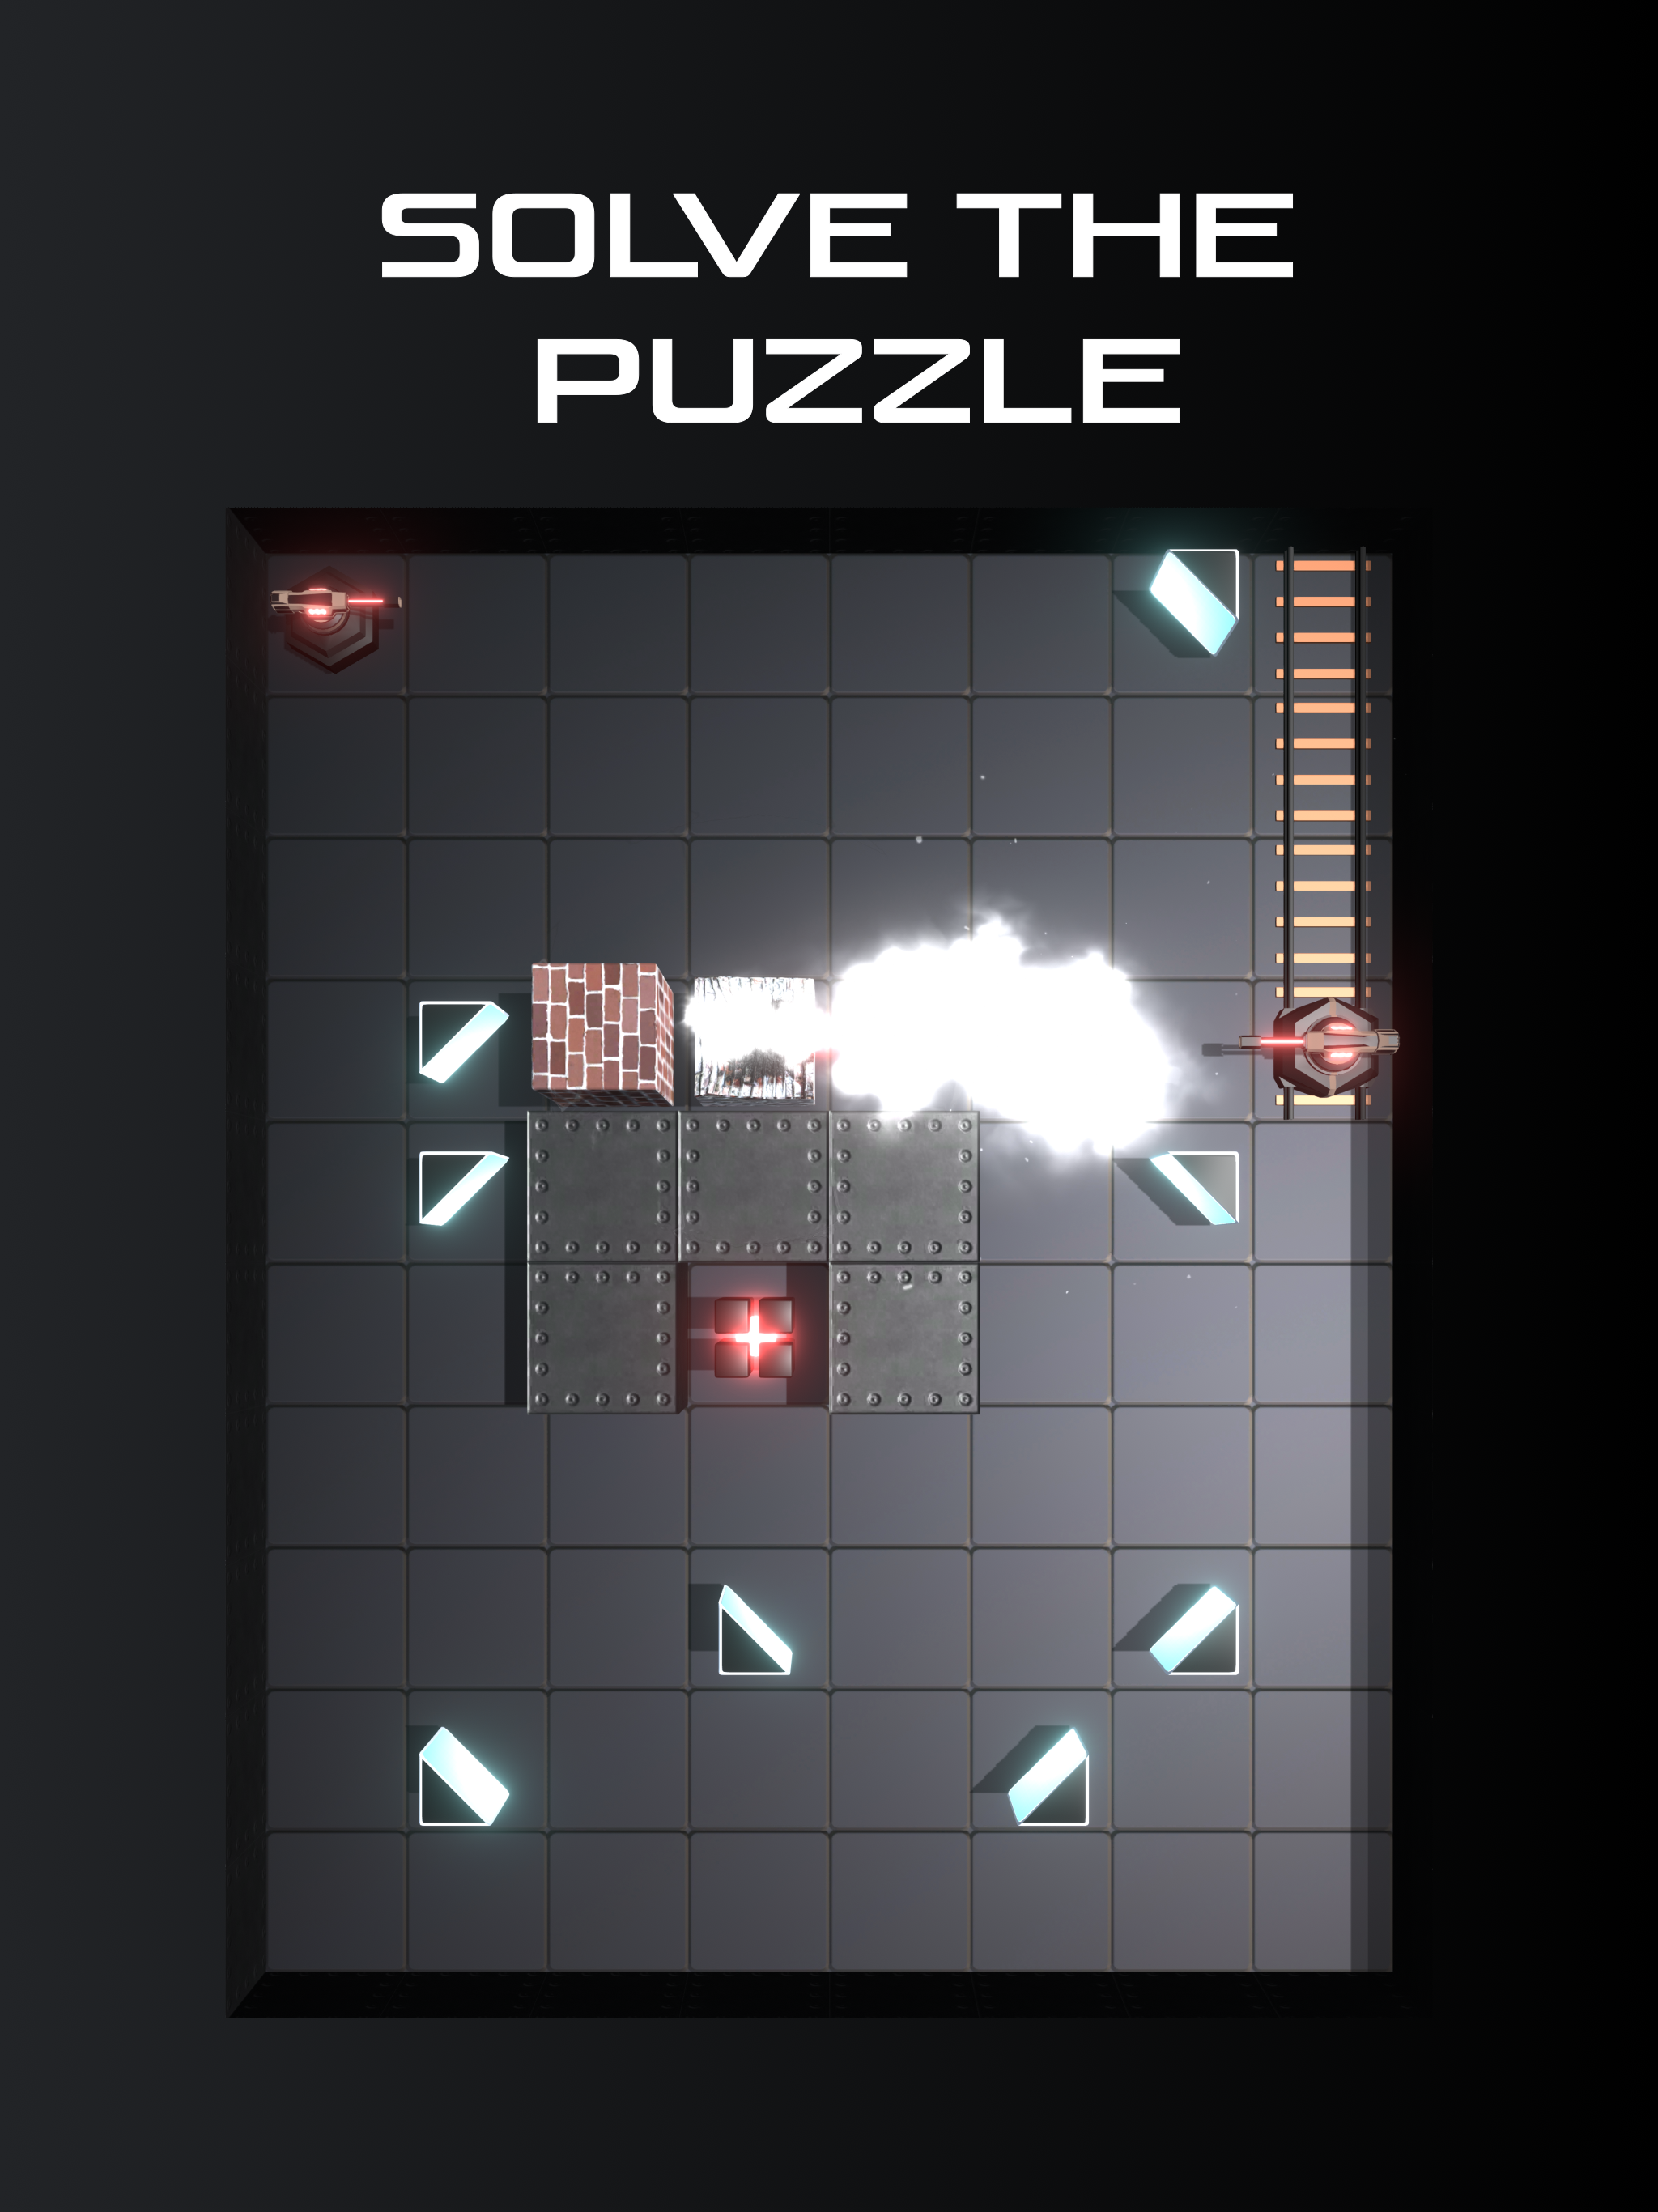 Laser Puzzle 게임 스크린 샷